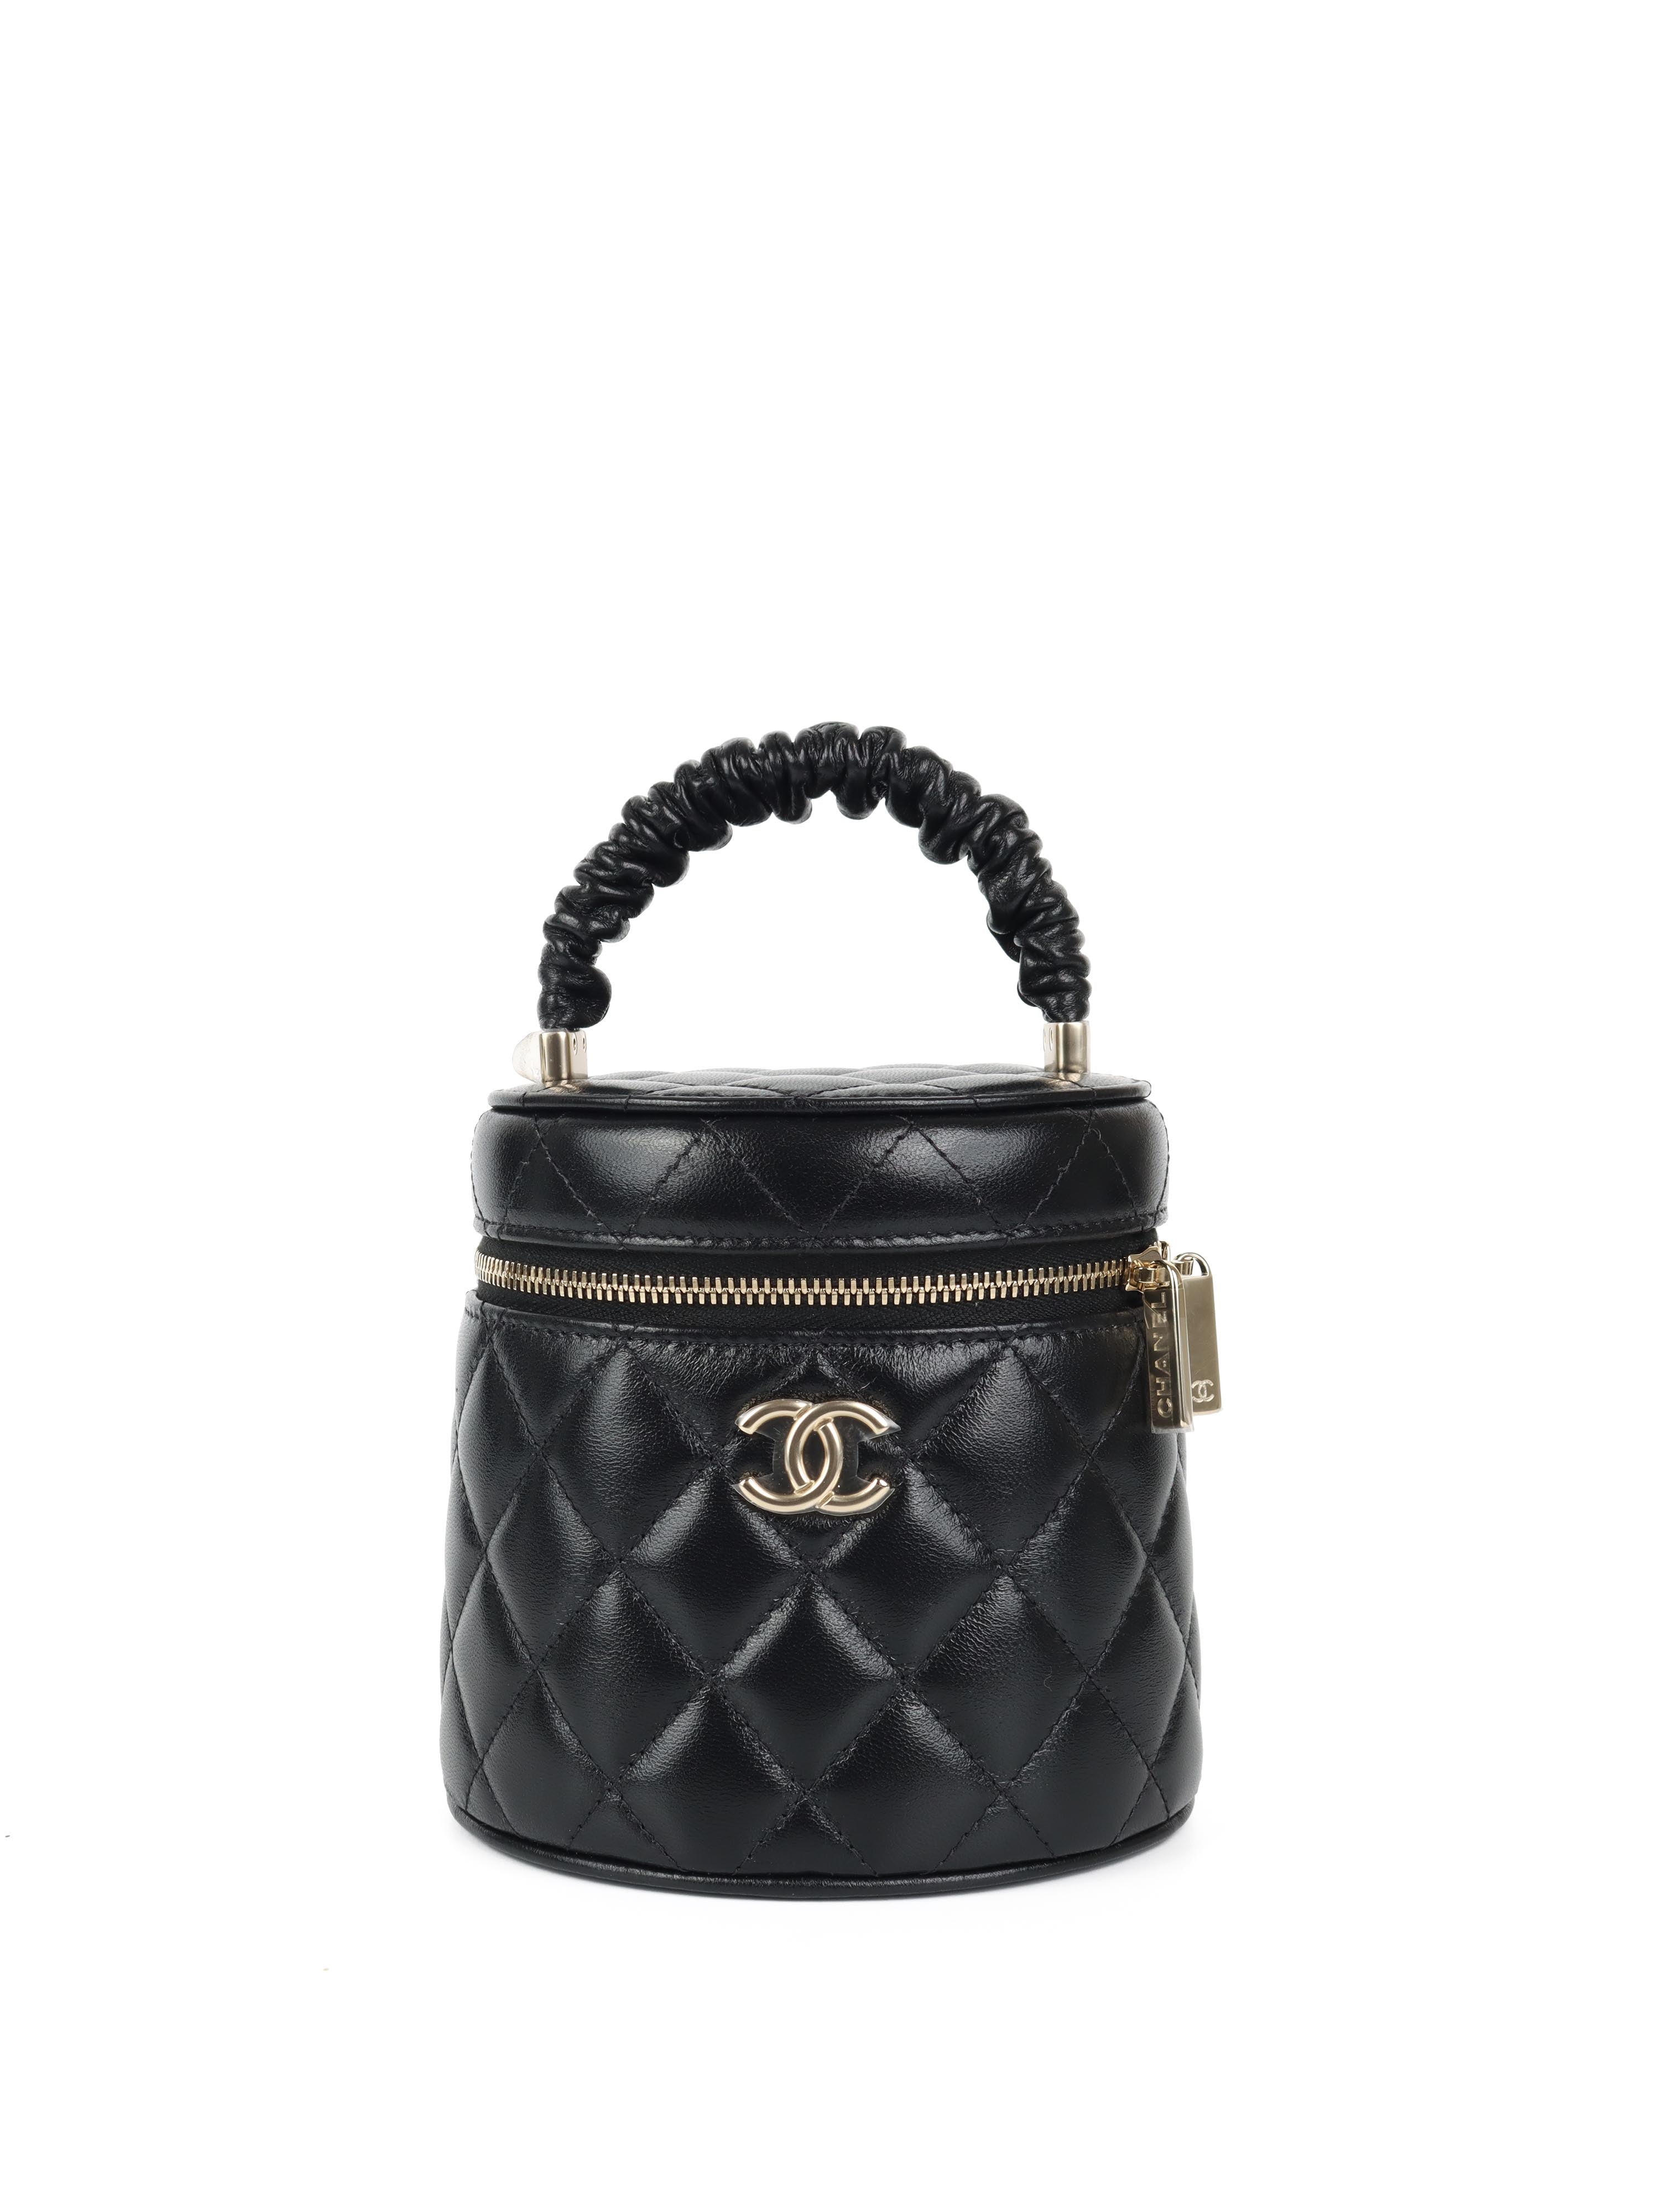 Chanel Black 22S Top Handle Vanity Bag